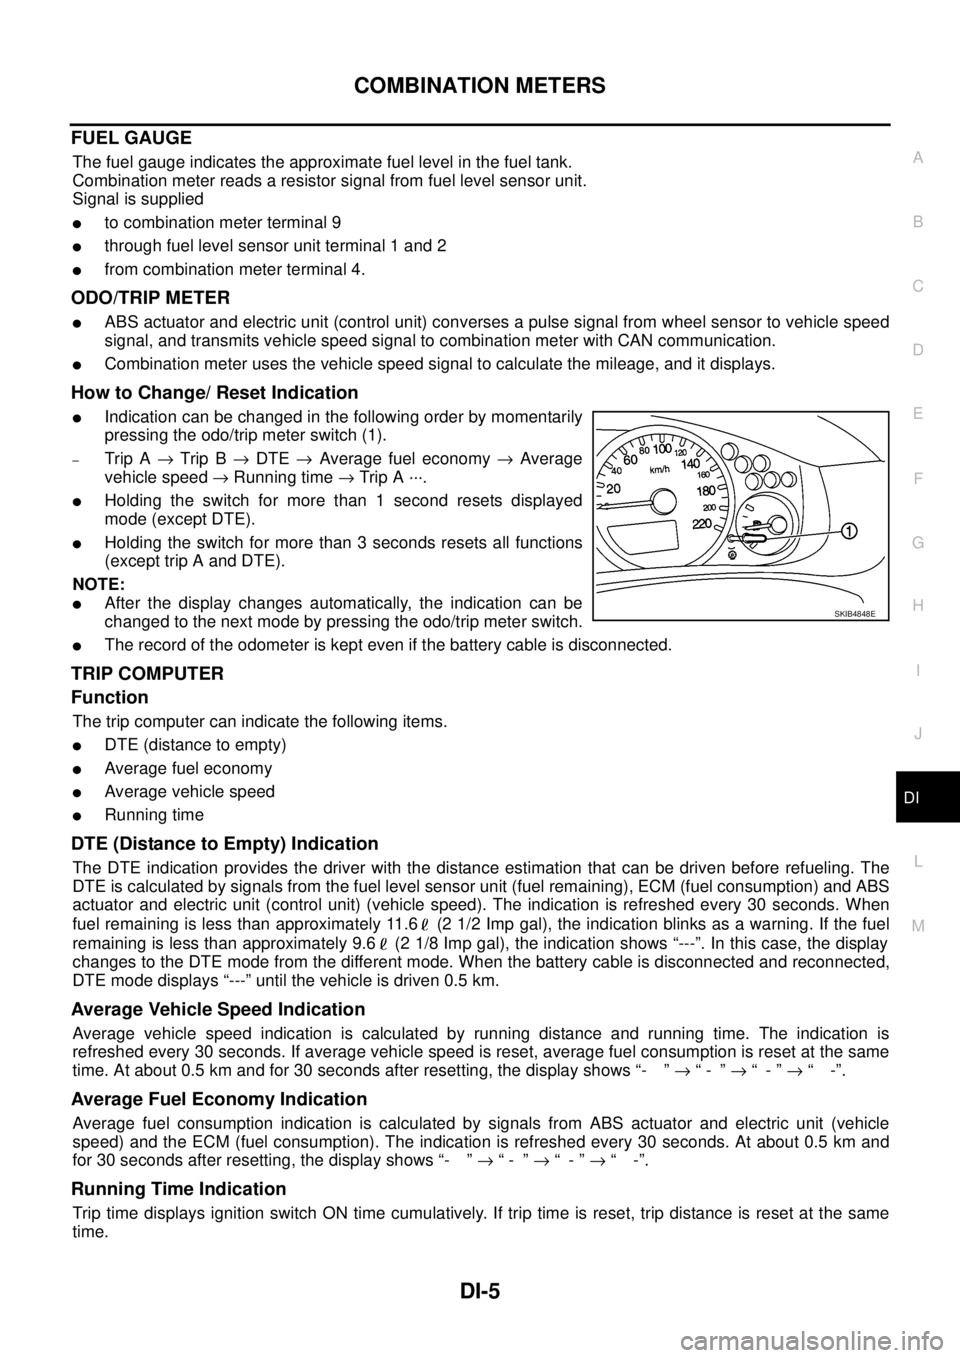 NISSAN NAVARA 2005  Repair Workshop Manual COMBINATION METERS
DI-5
C
D
E
F
G
H
I
J
L
MA
B
DI
FUEL GAUGE
The fuel gauge indicates the approximate fuel level in the fuel tank.
Combination meter reads a resistor signal from fuel level sensor unit